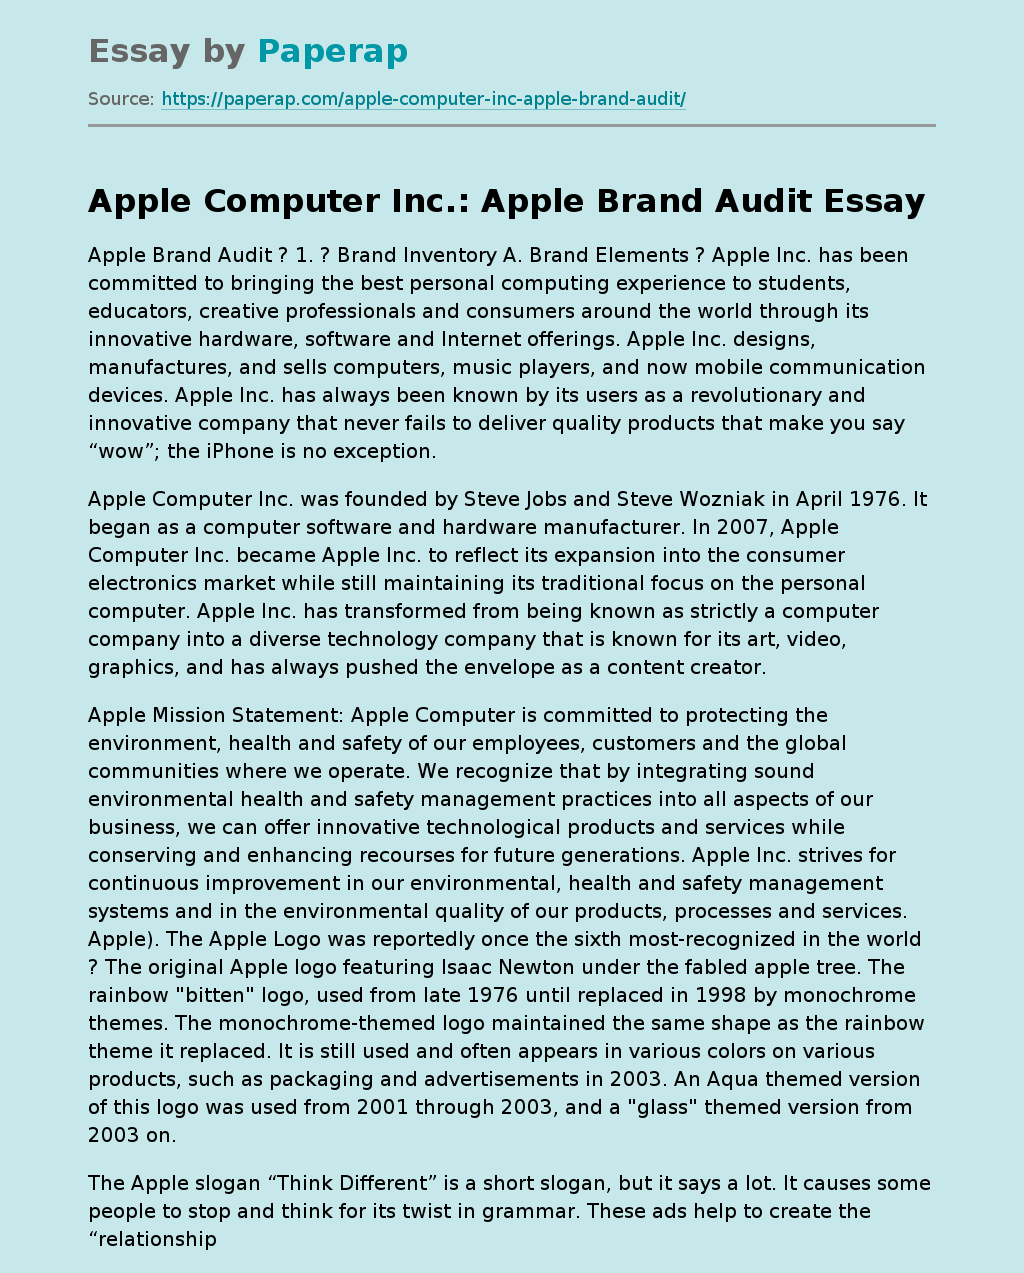 Apple Computer Inc.: Apple Brand Audit